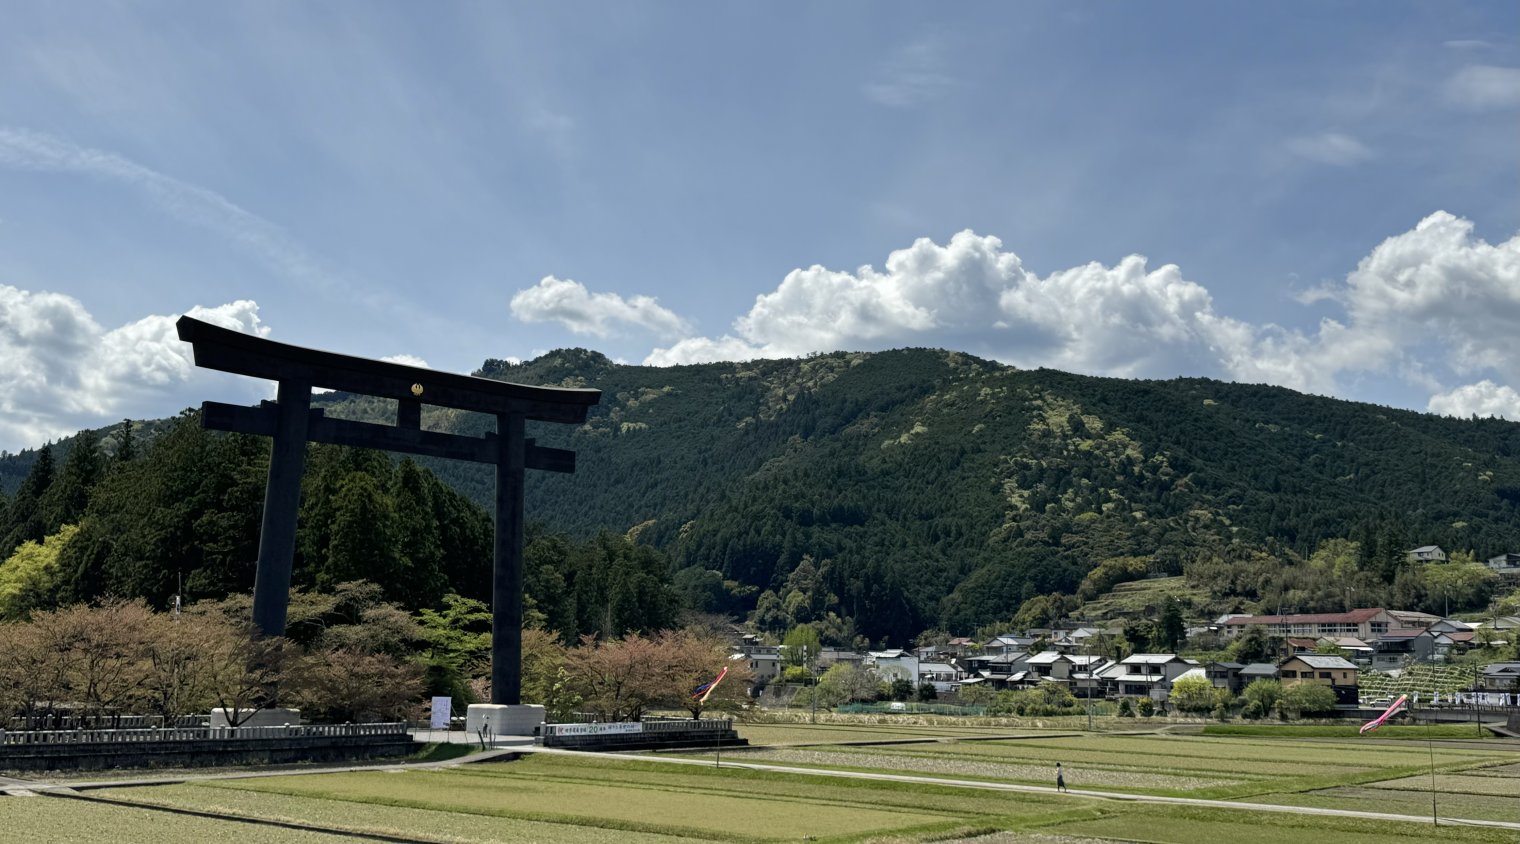 Giant Torii gate at Kumano Hongu Taisha